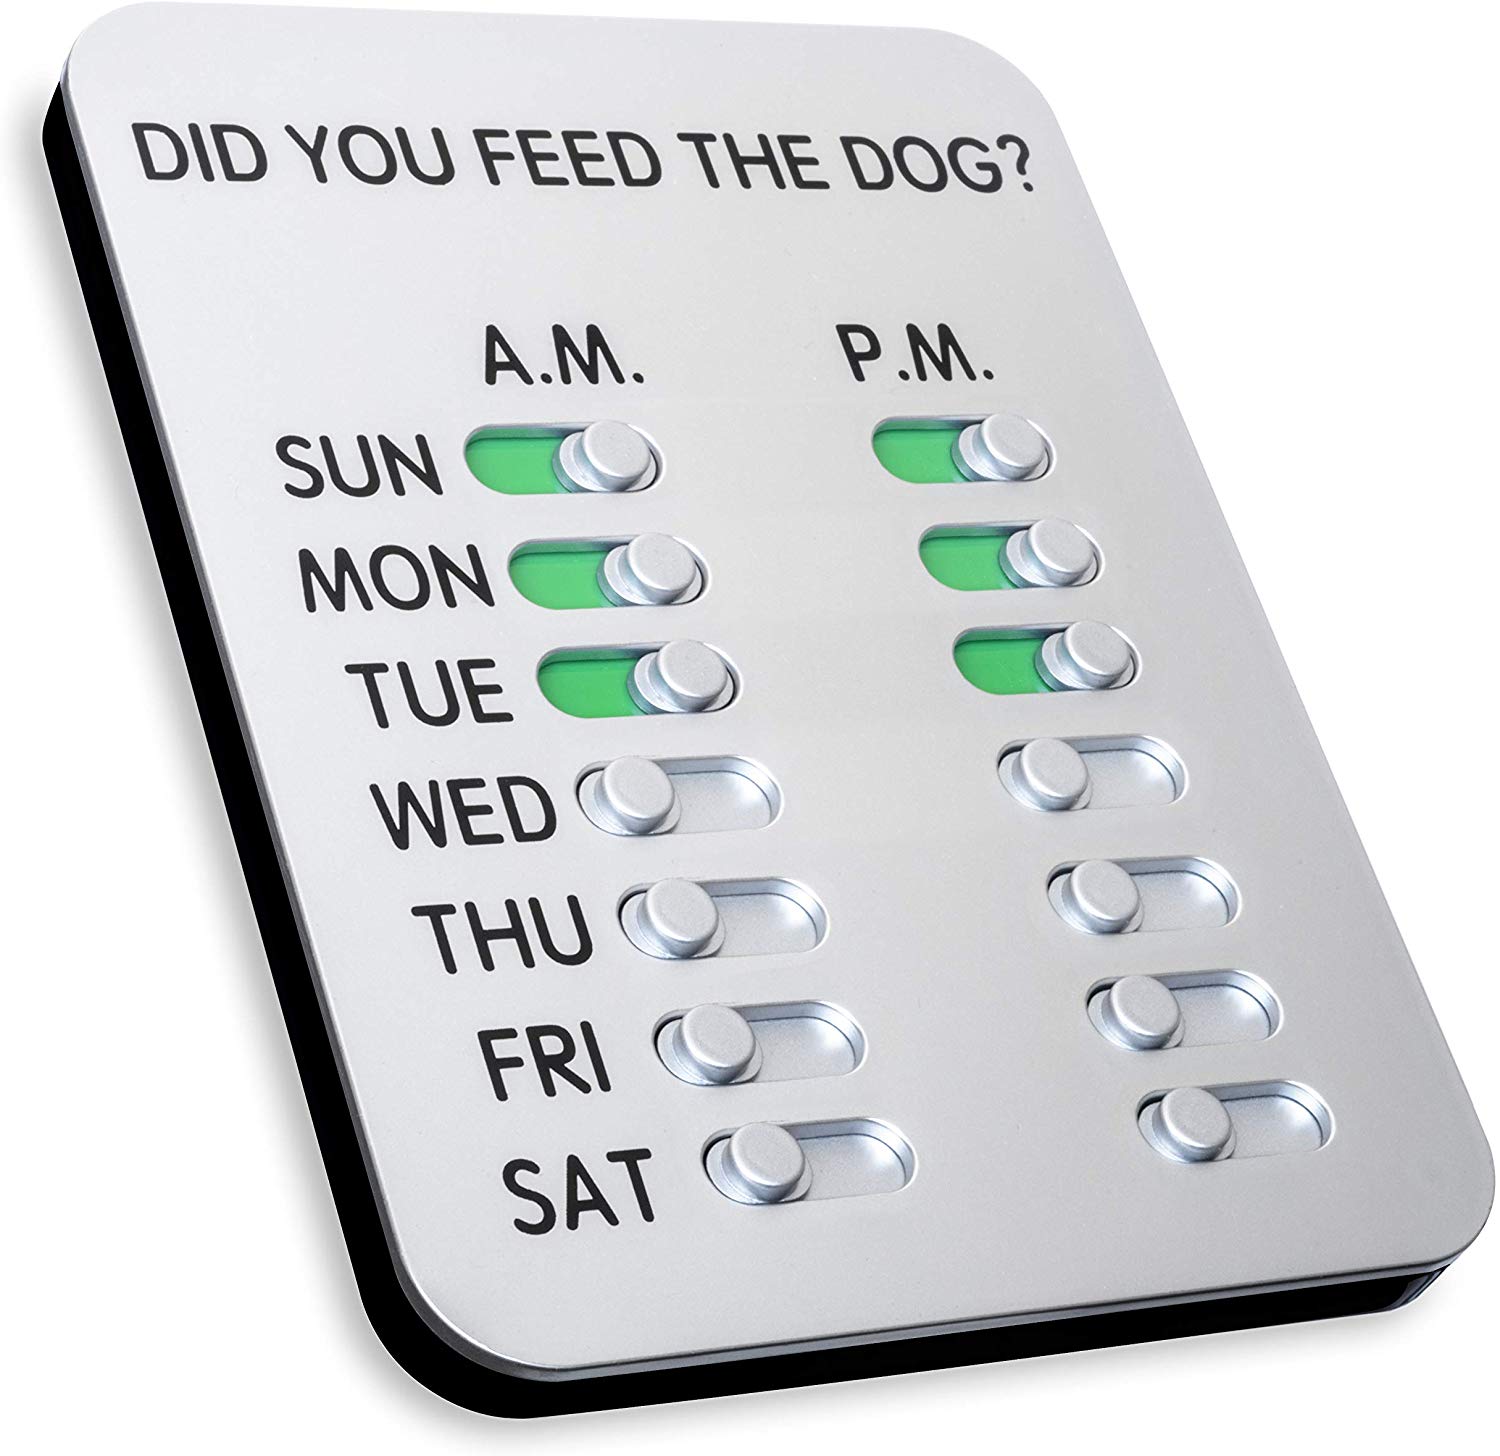 did you feed the dog chart - Did You Feed The Dog? P.M. A.M. Suno Mono Tue Wed Thu Fri O Sat O